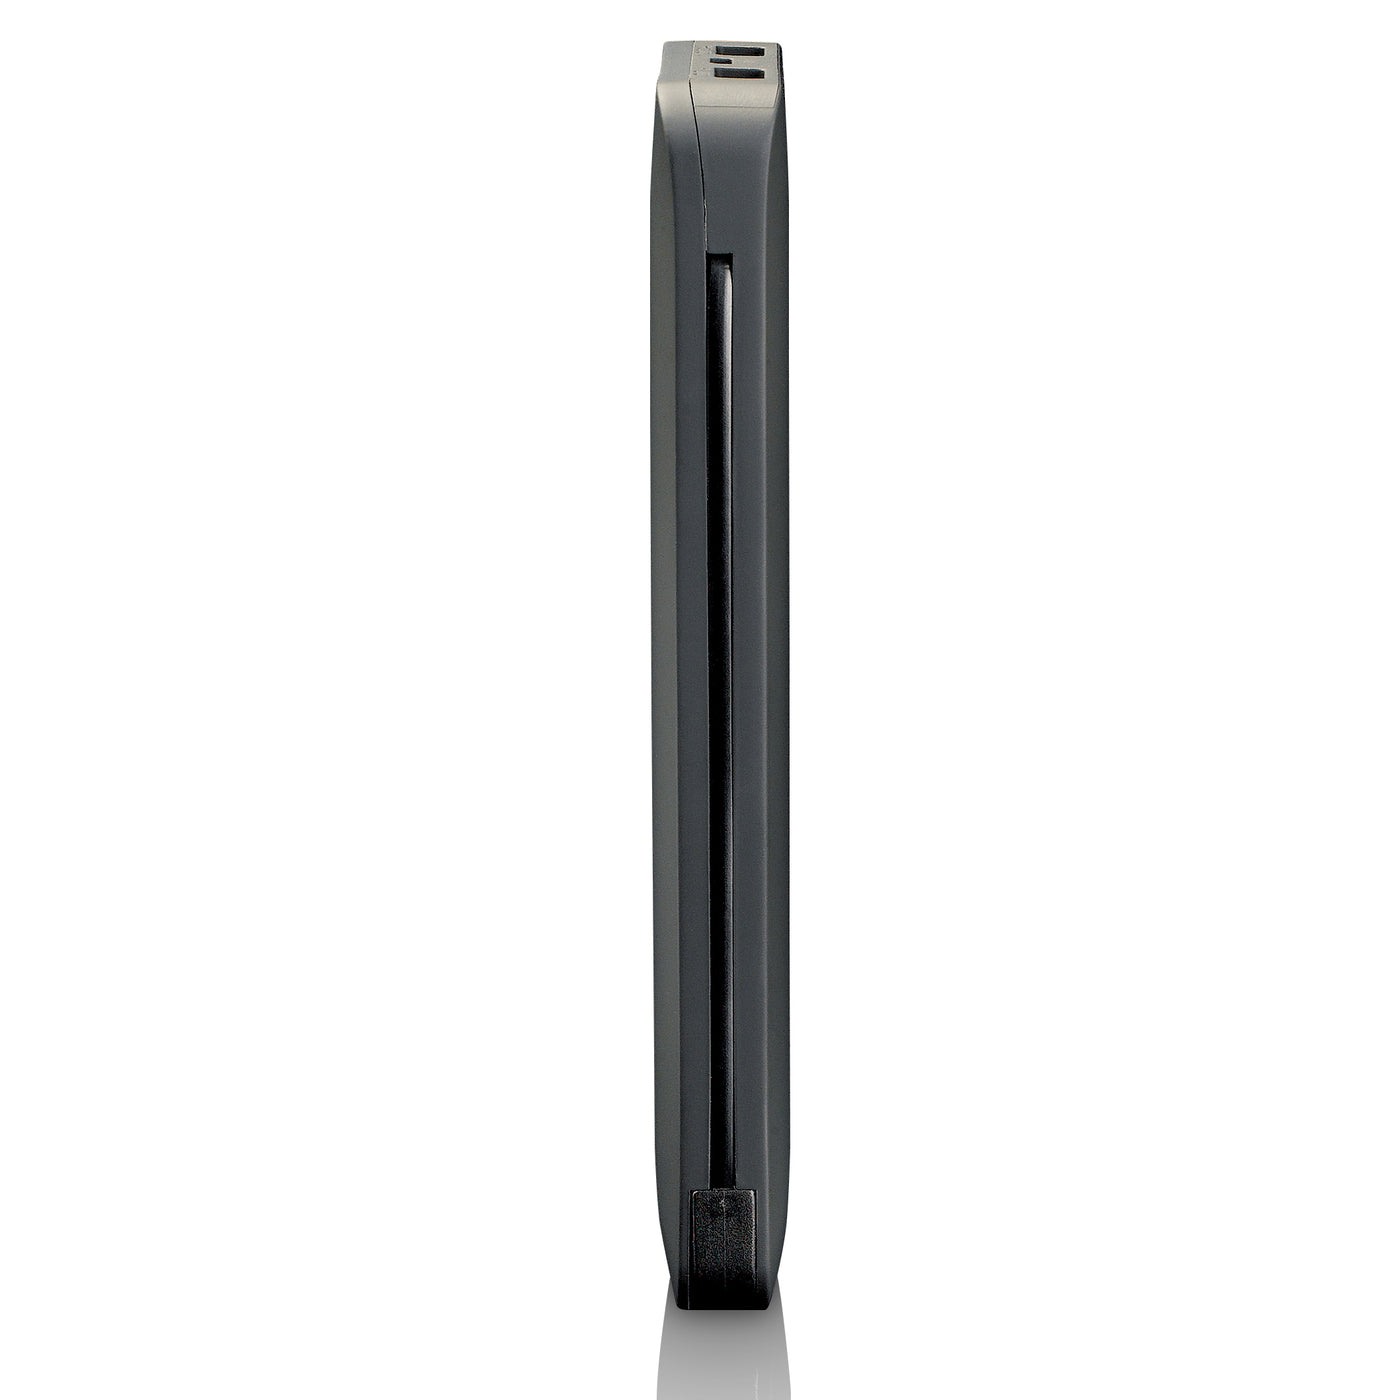 Lenco PBA-830 - Powerbank of 8000 mah with Apple and USB connection - Black